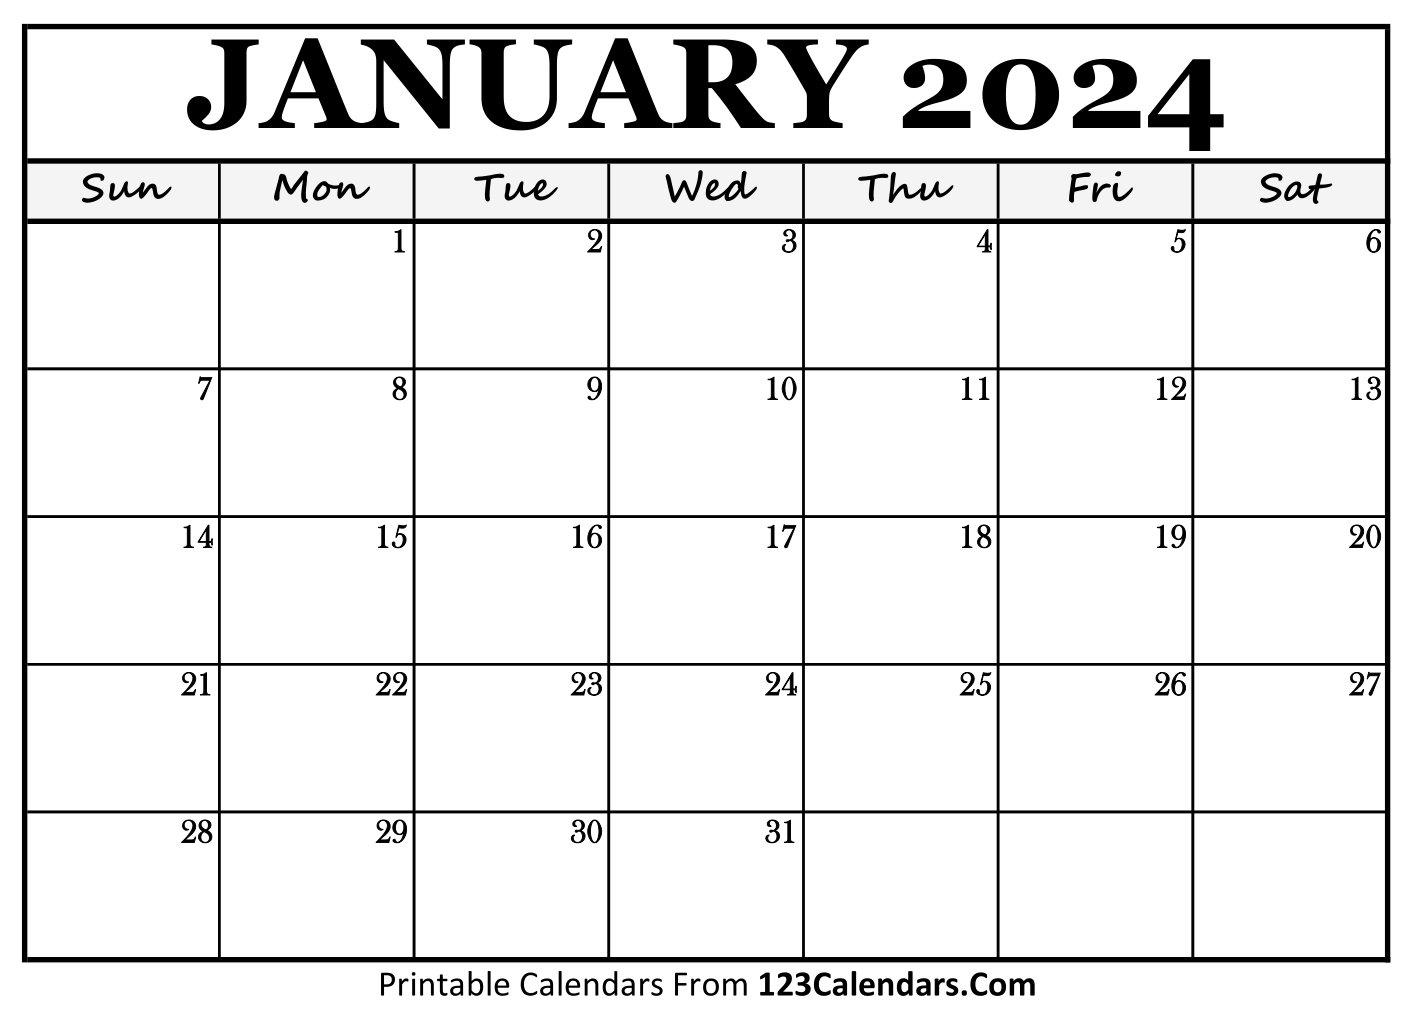 Printable January 2024 Calendar Templates - 123Calendars | January Printable Calendar 2024 Free